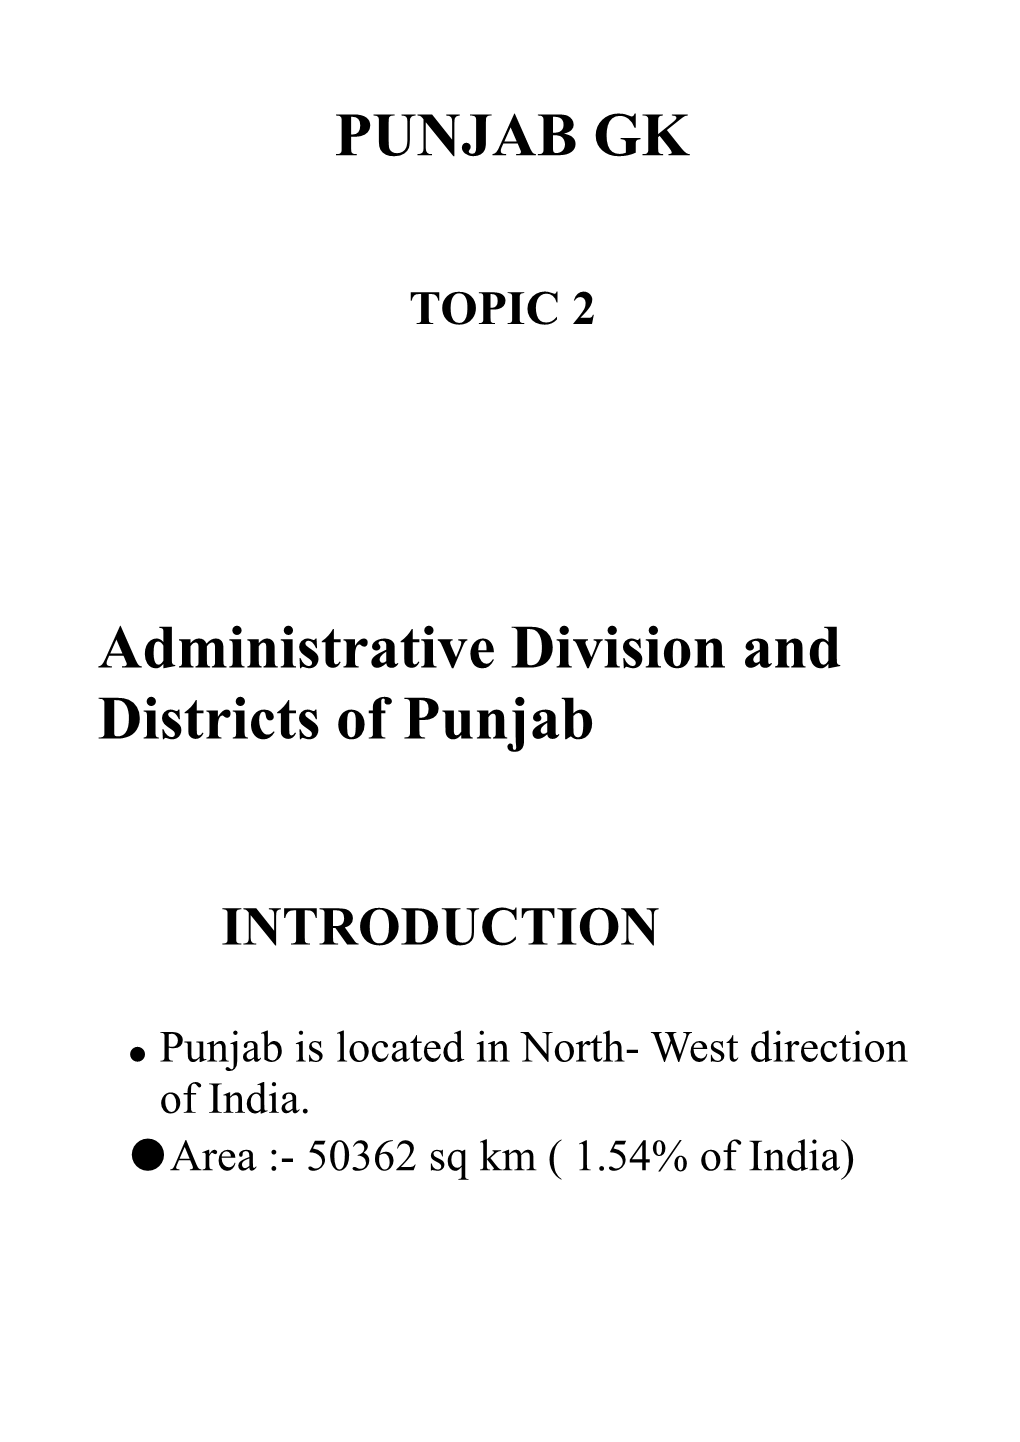 PUNJAB GK Administrative Division and Districts of Punjab